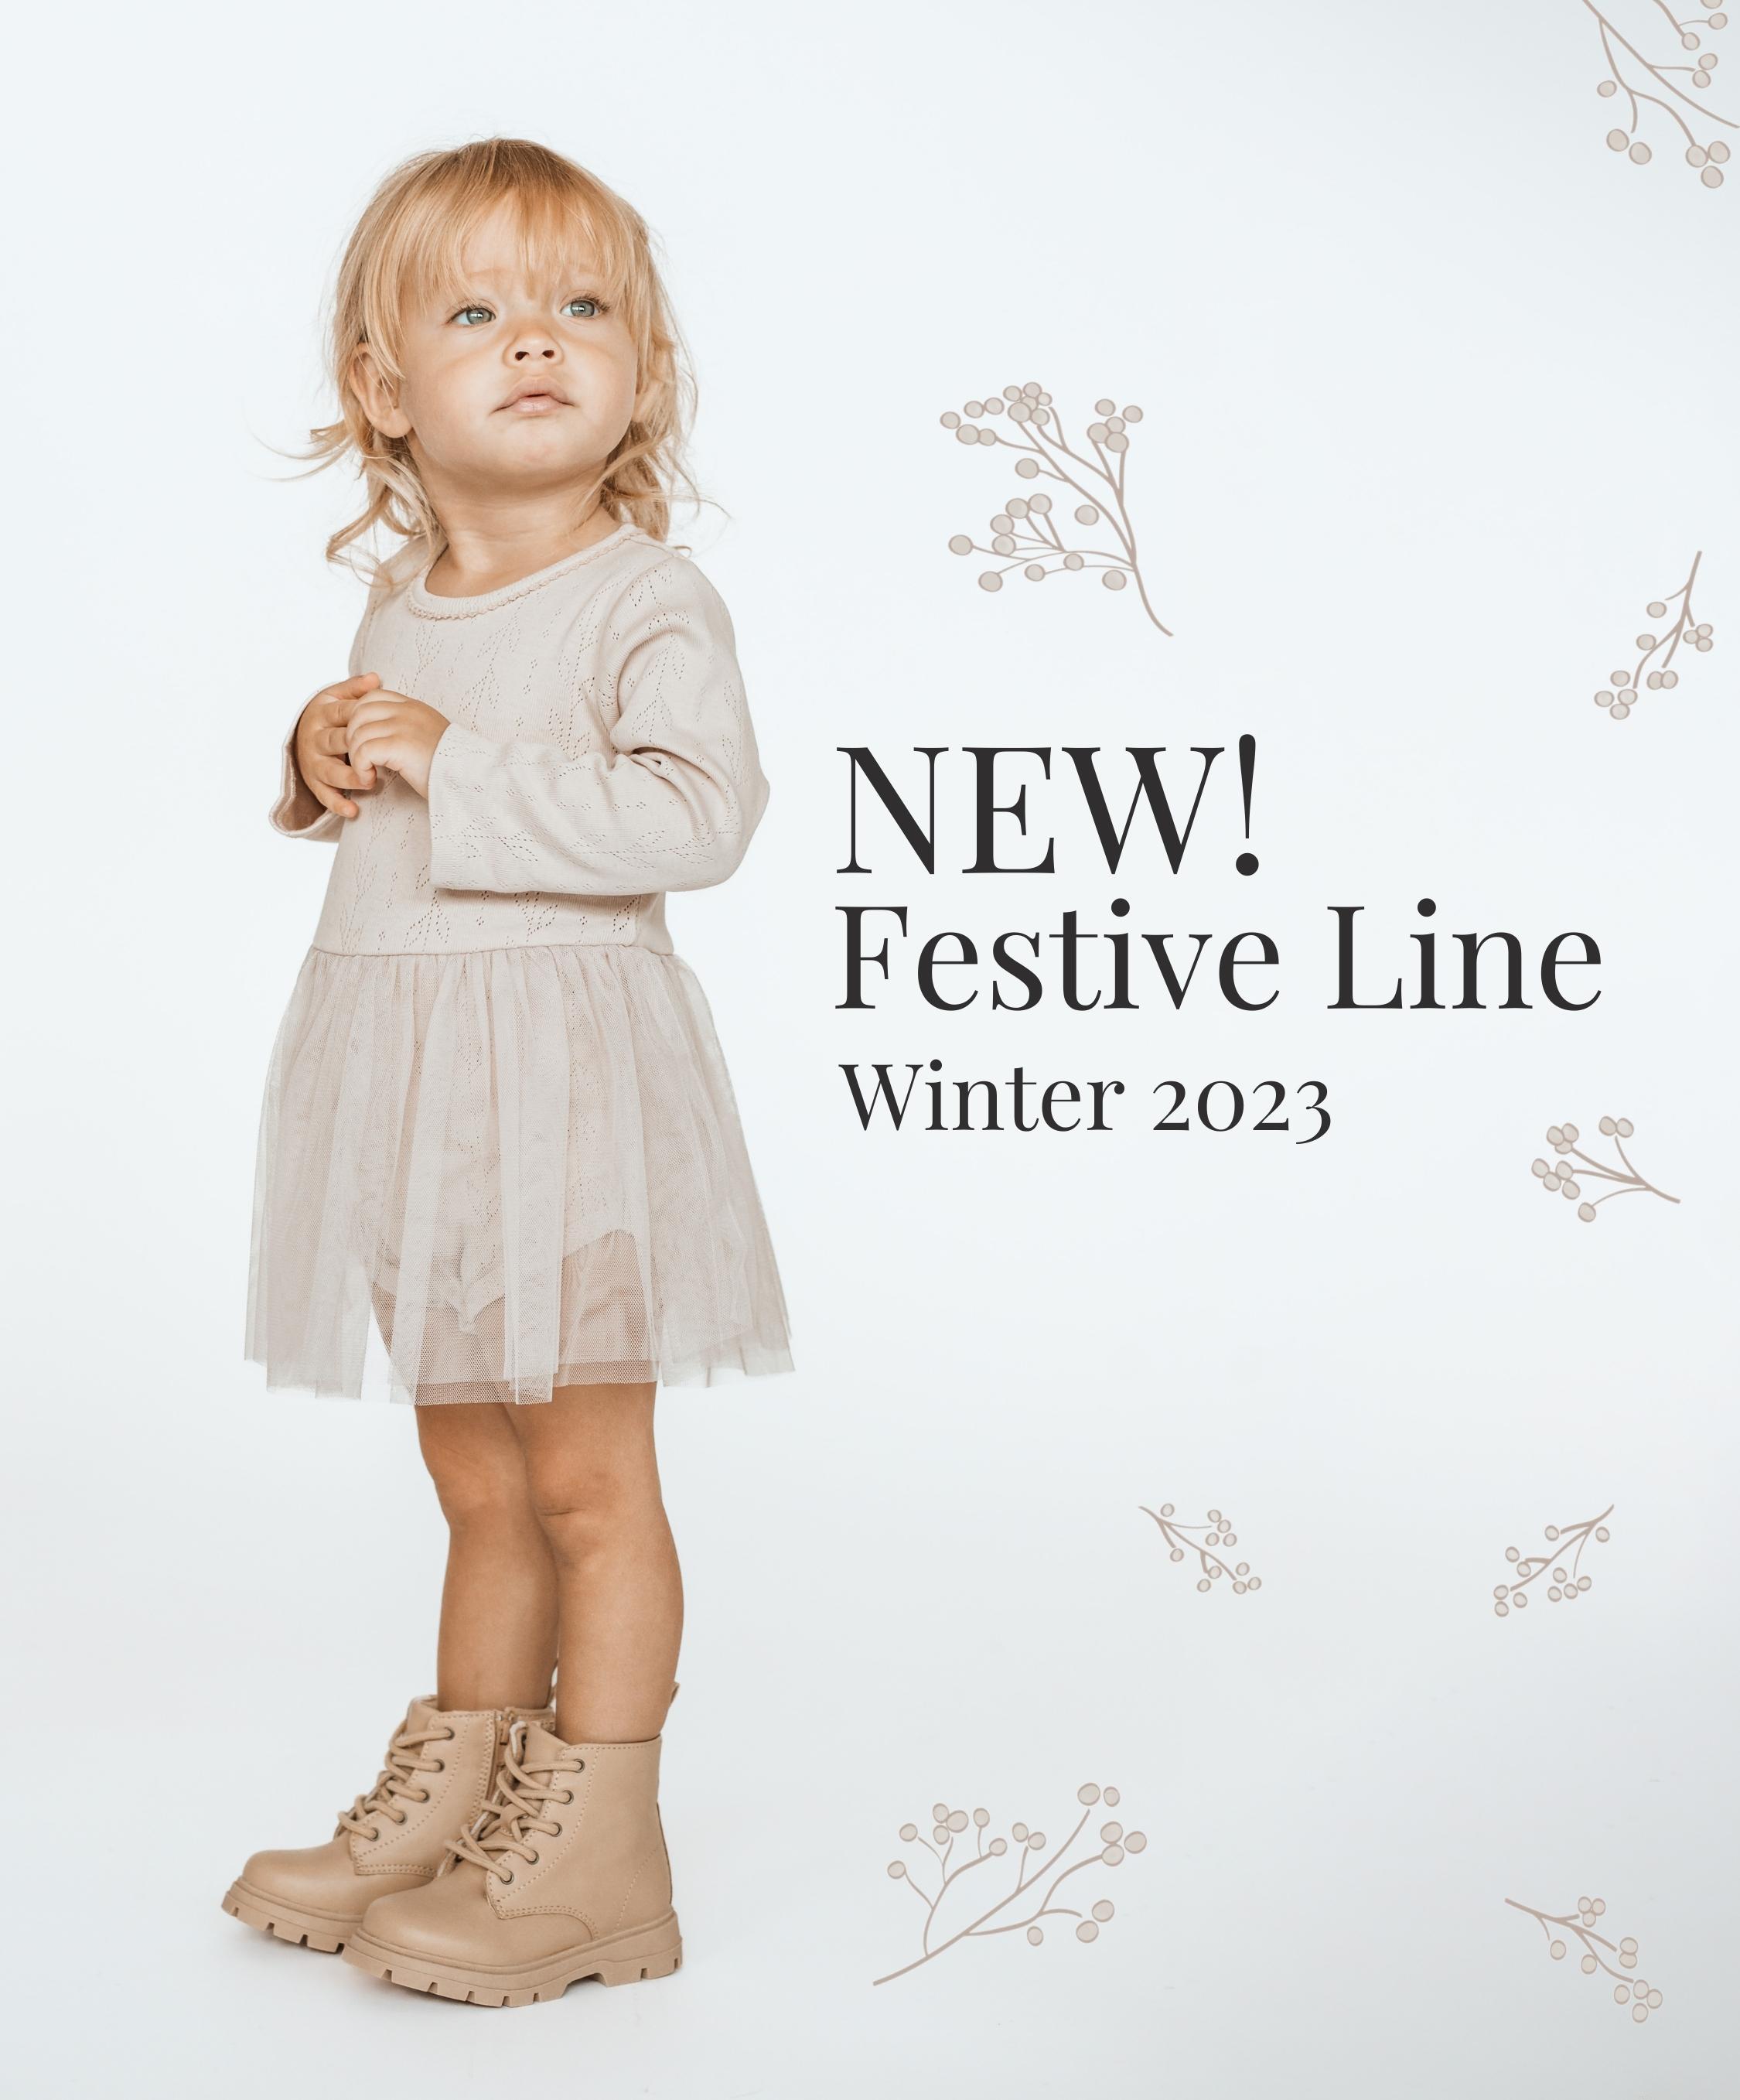 new! festive line. winter 2023